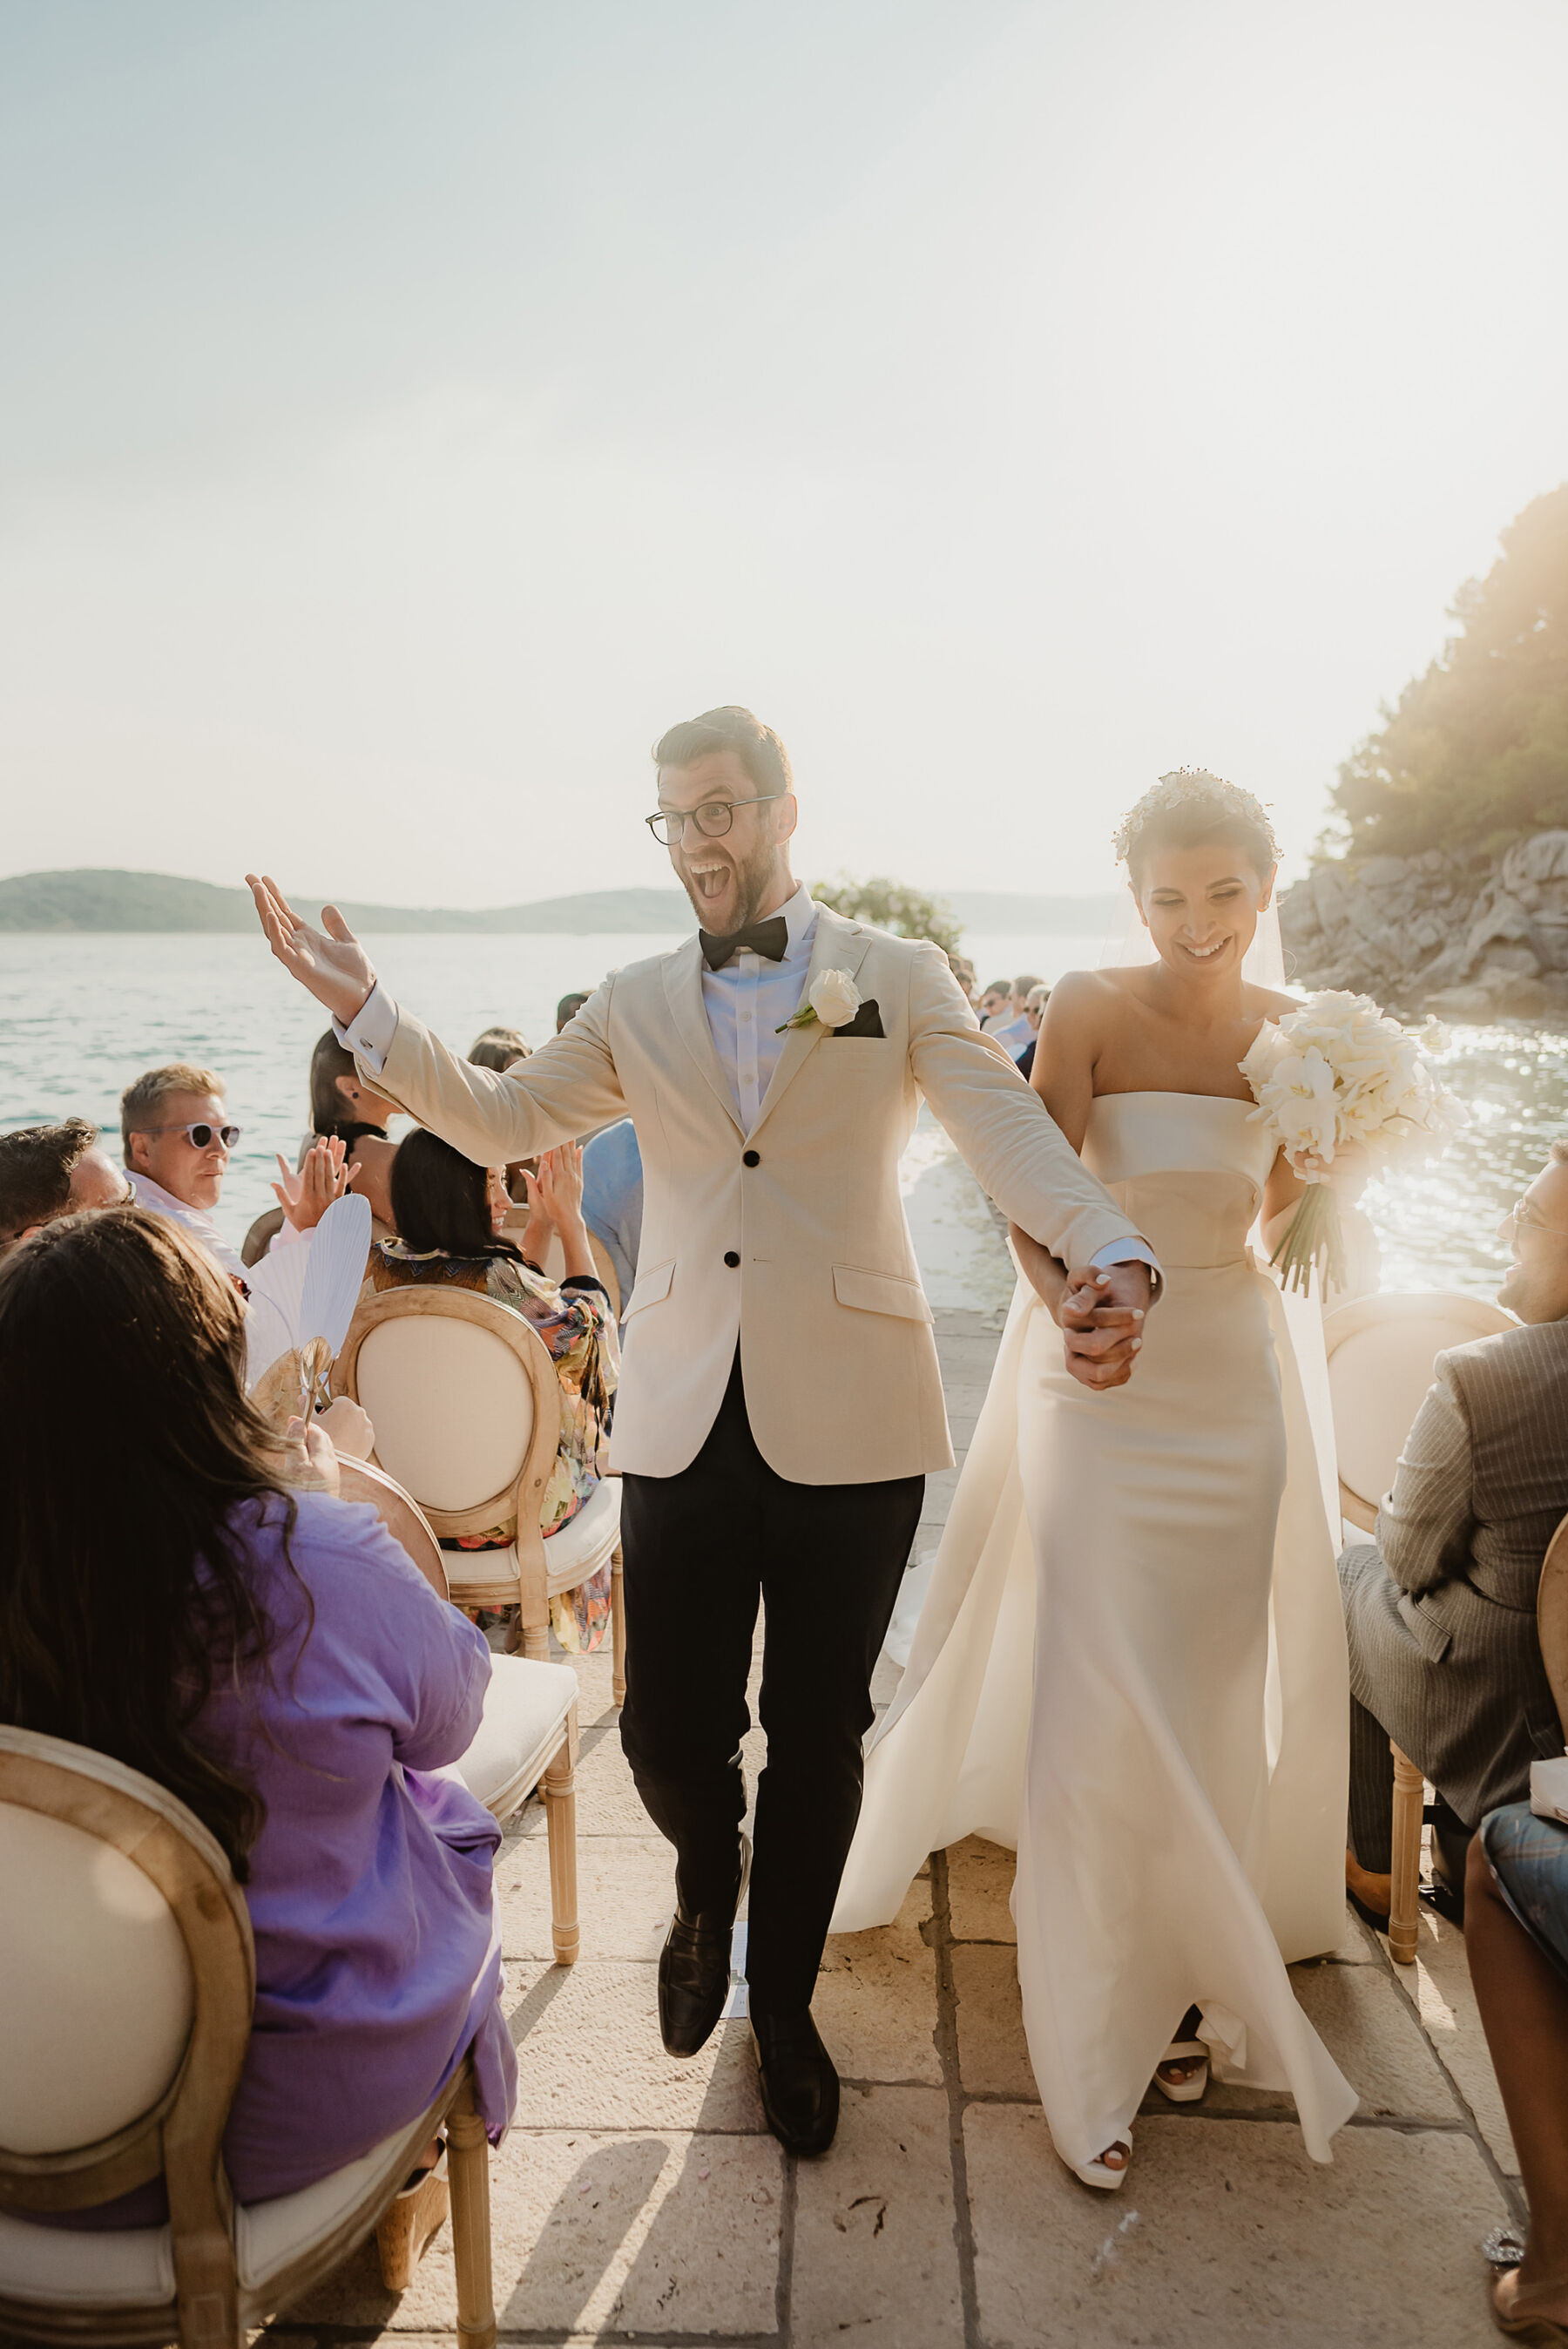 Joyful groom in white tux, outdoor wedding by the sea 